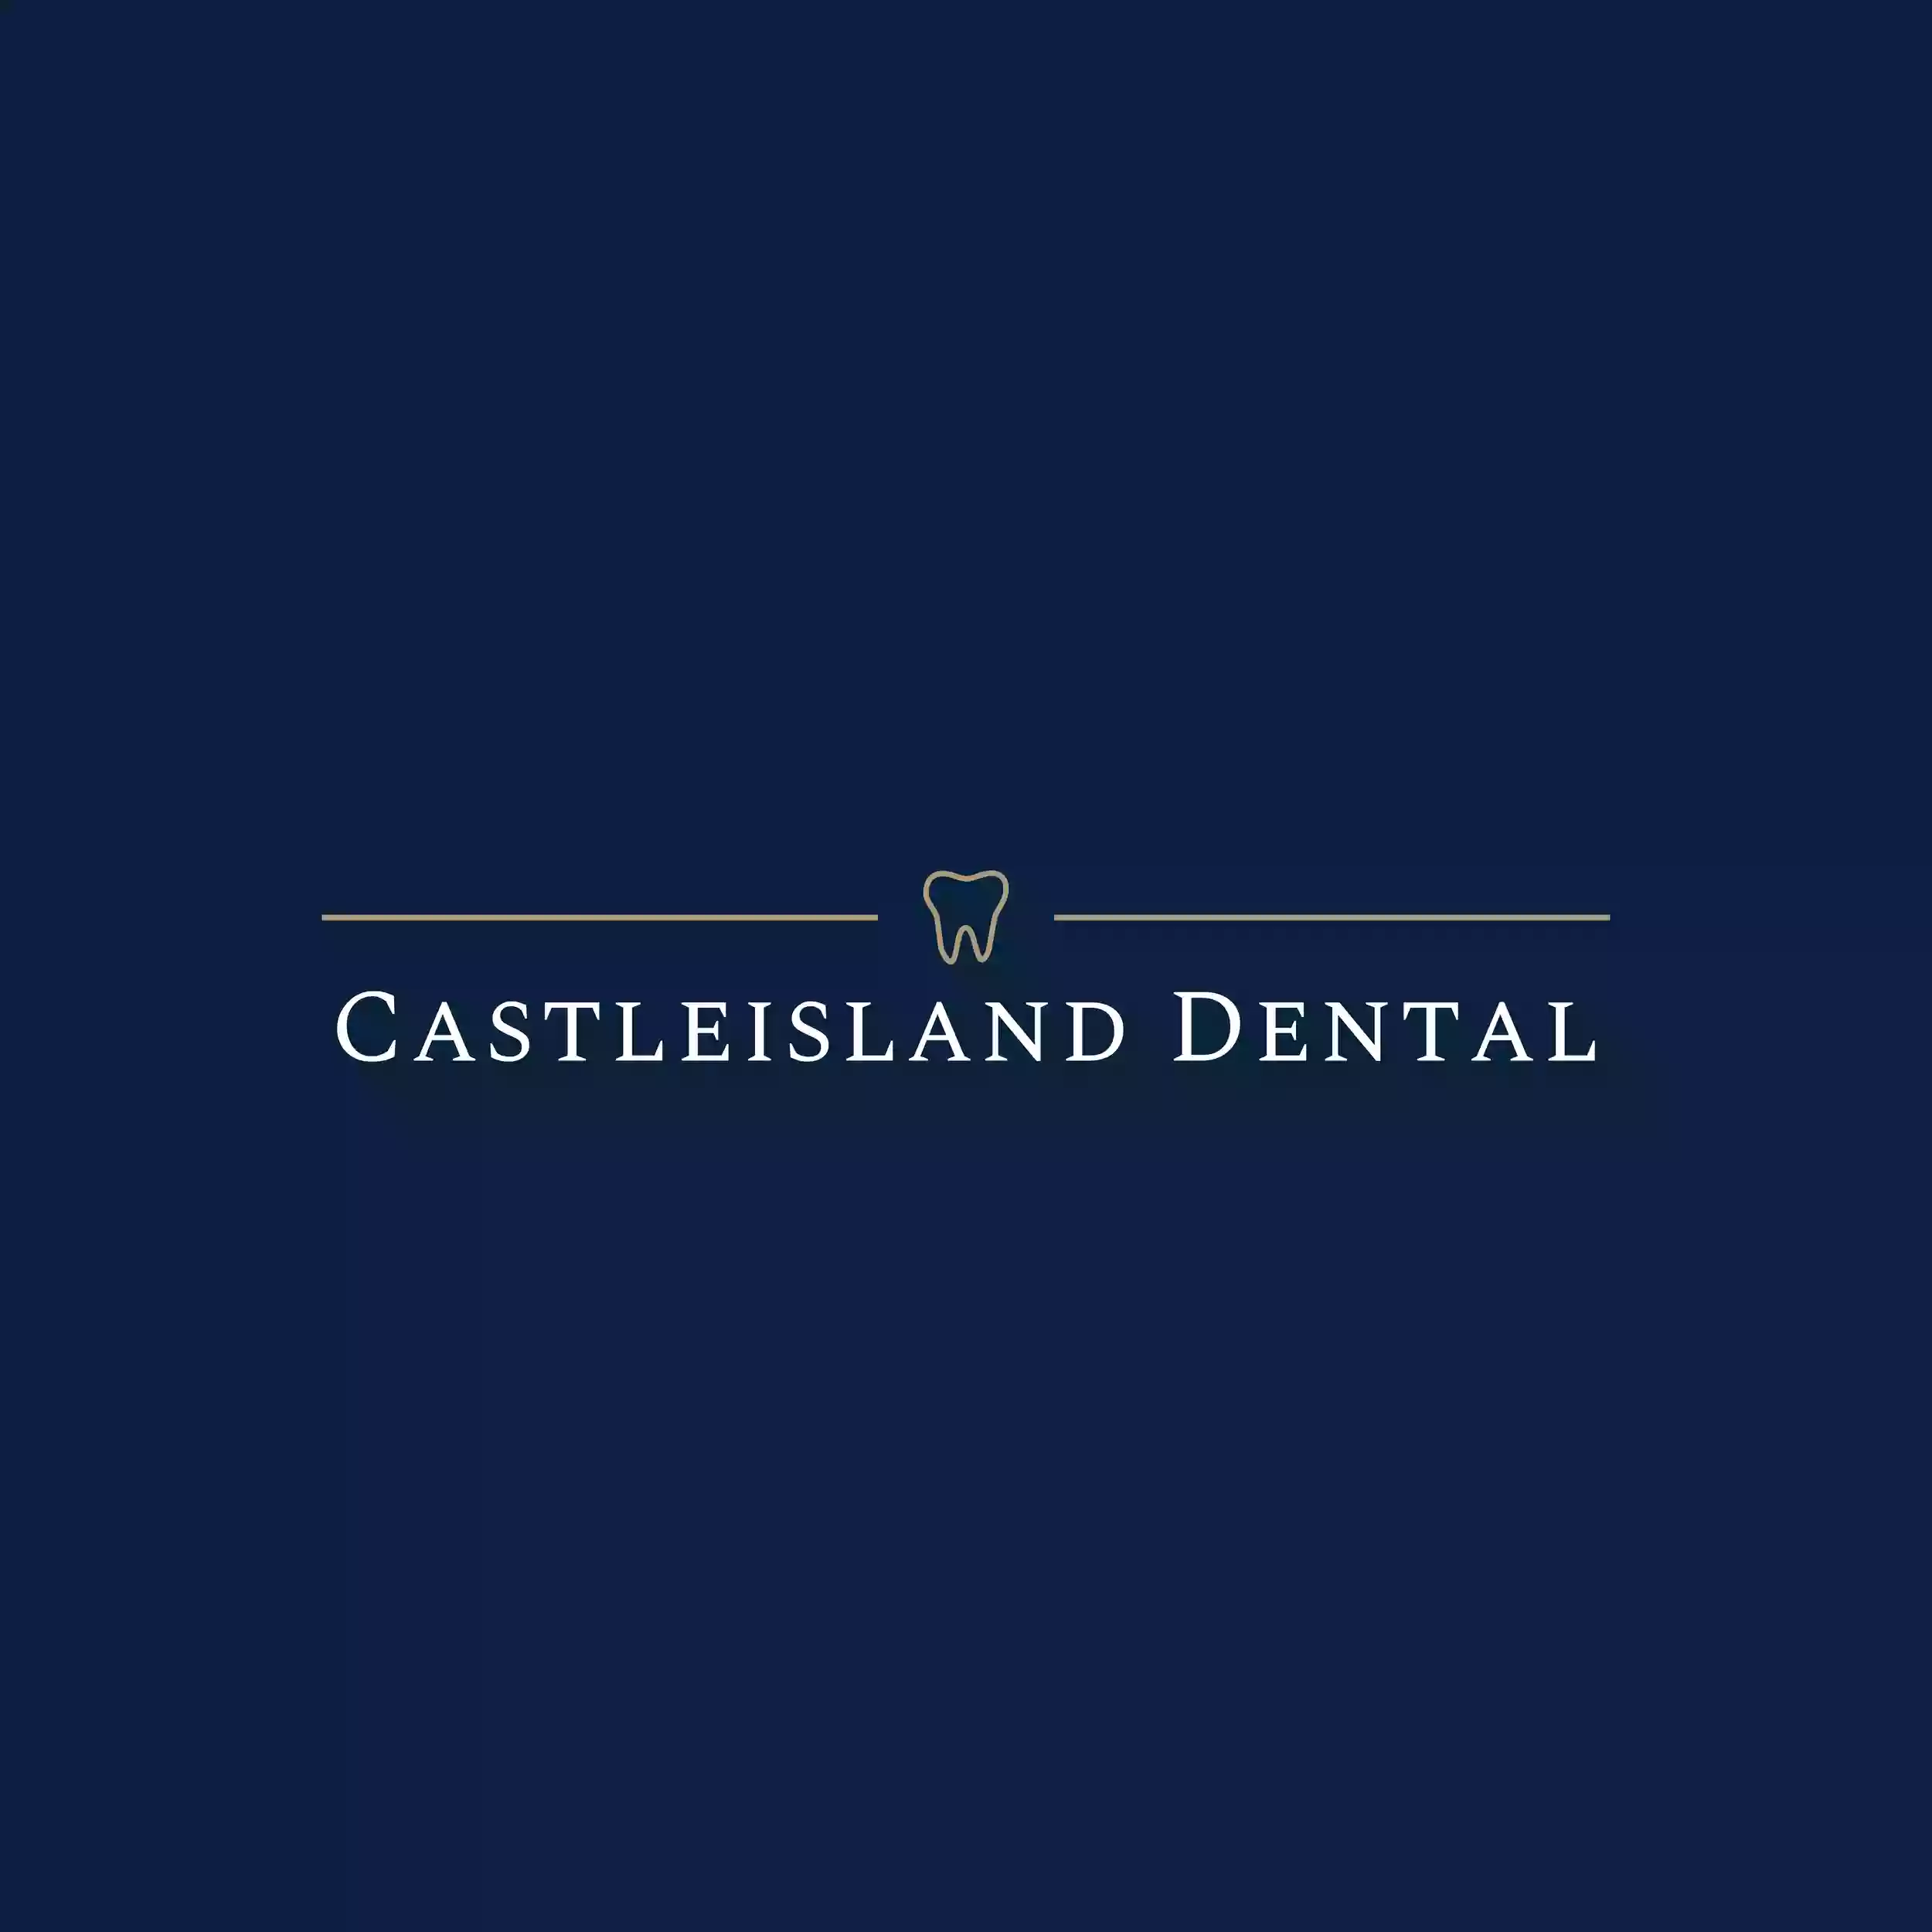 Castleisland Dental